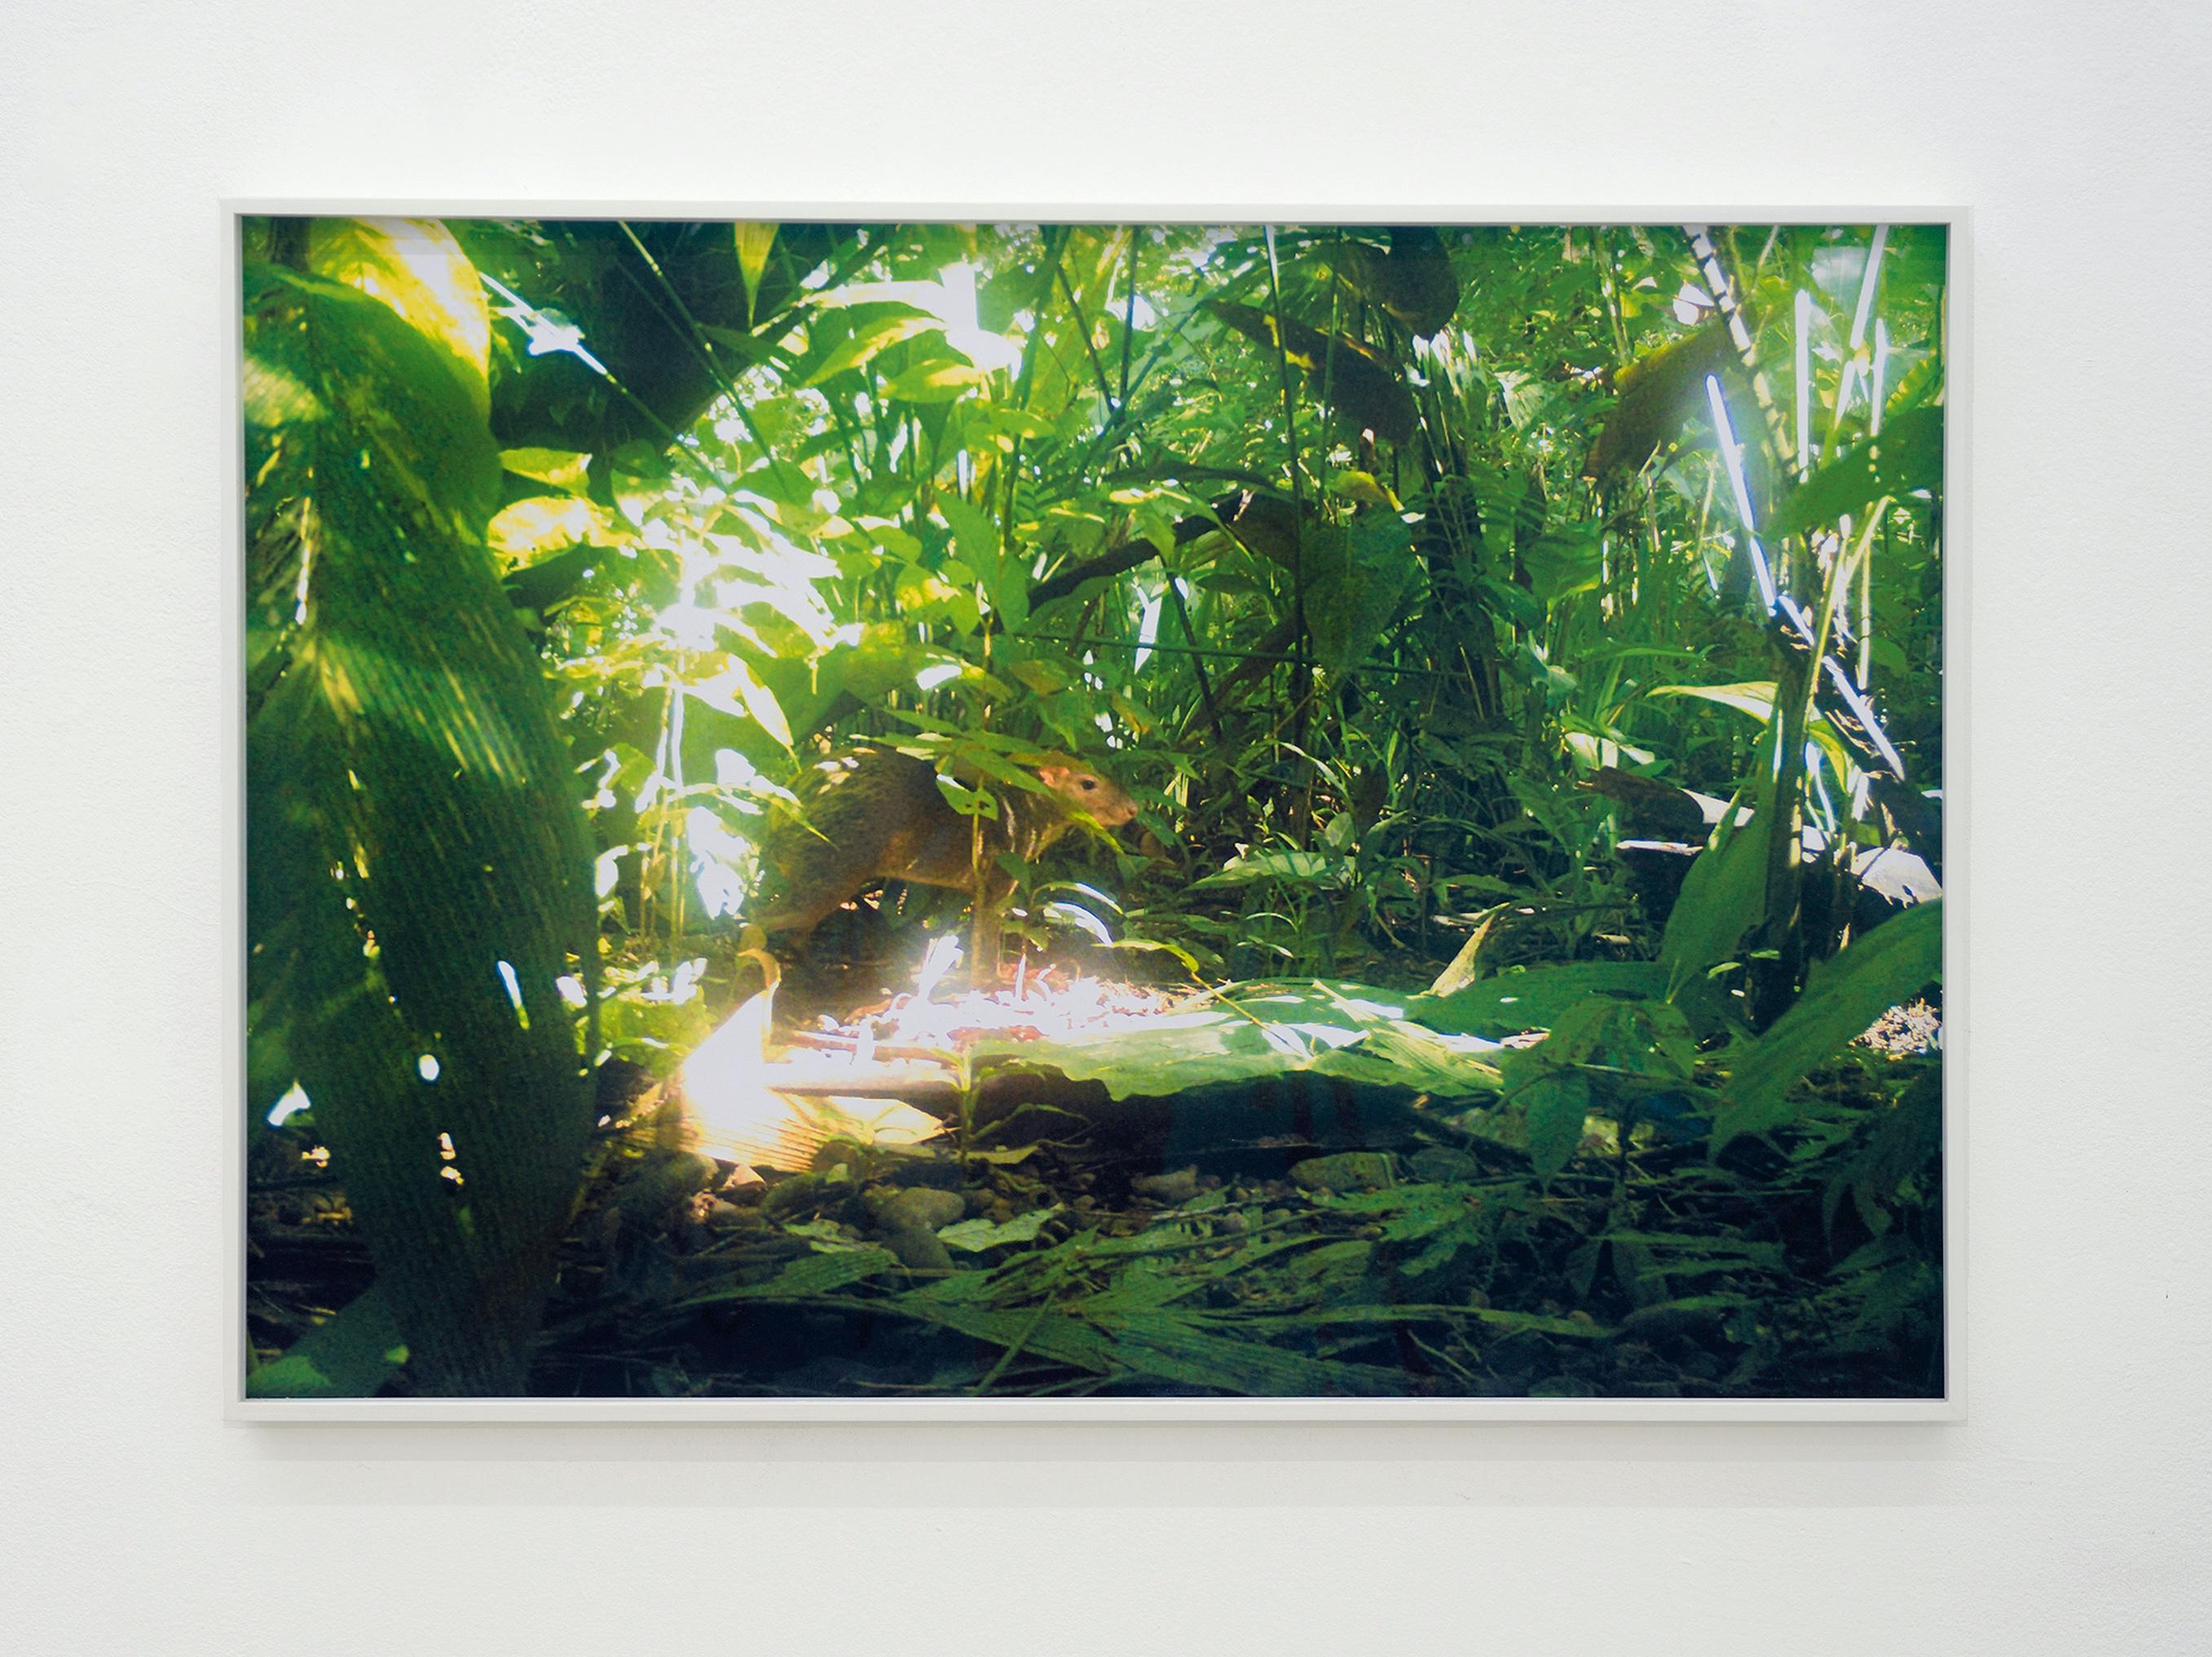 camera trap (Aguti) Ed. 2/3 - Contemporary Jungle Photography  For Sale 1